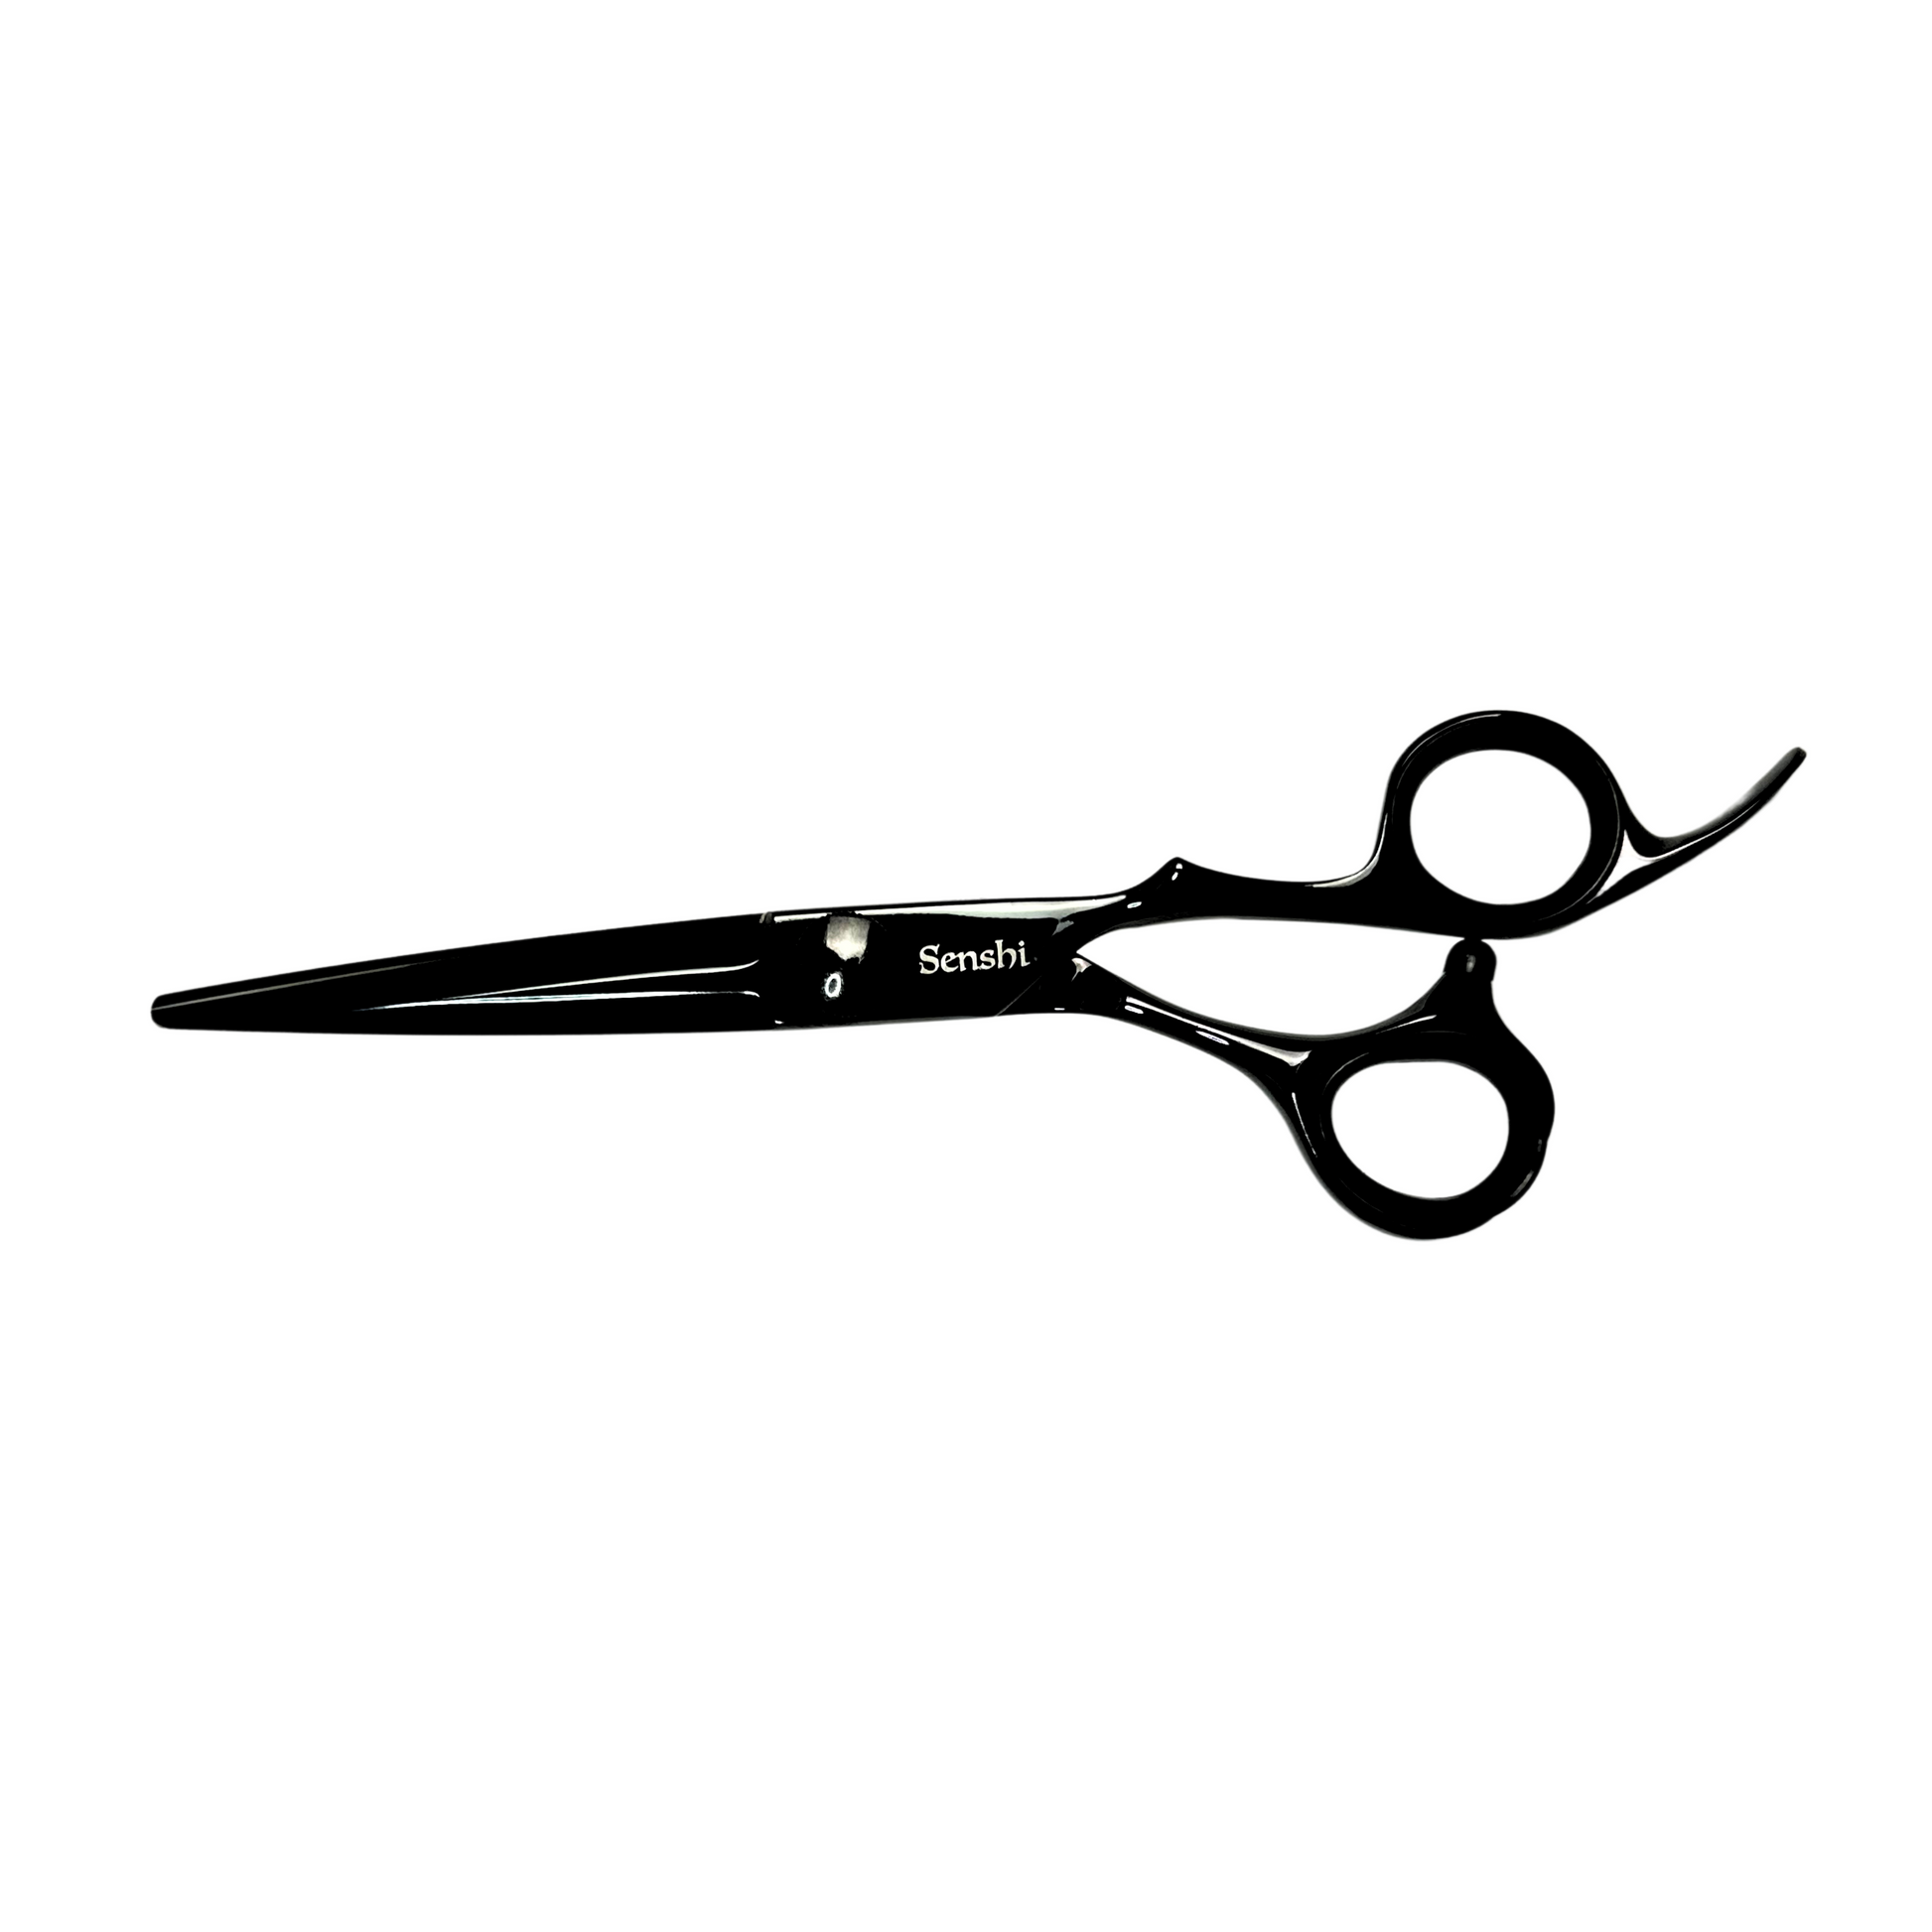 Shear Perfection Senshi Heavy Duty Shear - 2.5” Blades – OCG